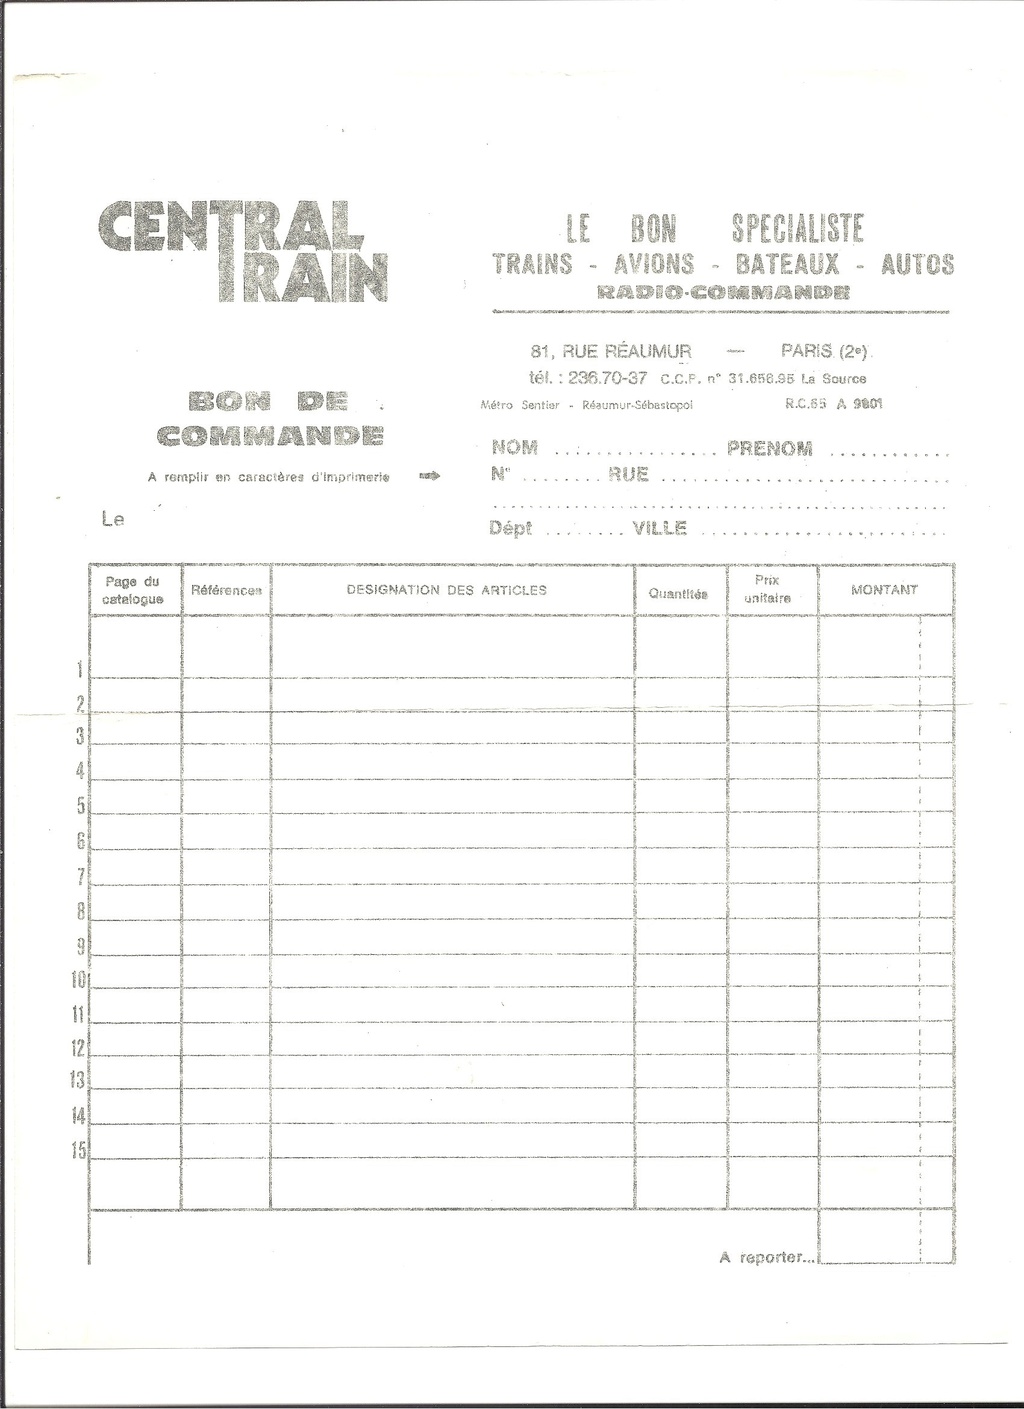 [CENTRAL TRAIN 1971] Catalogue 1971  Centra56